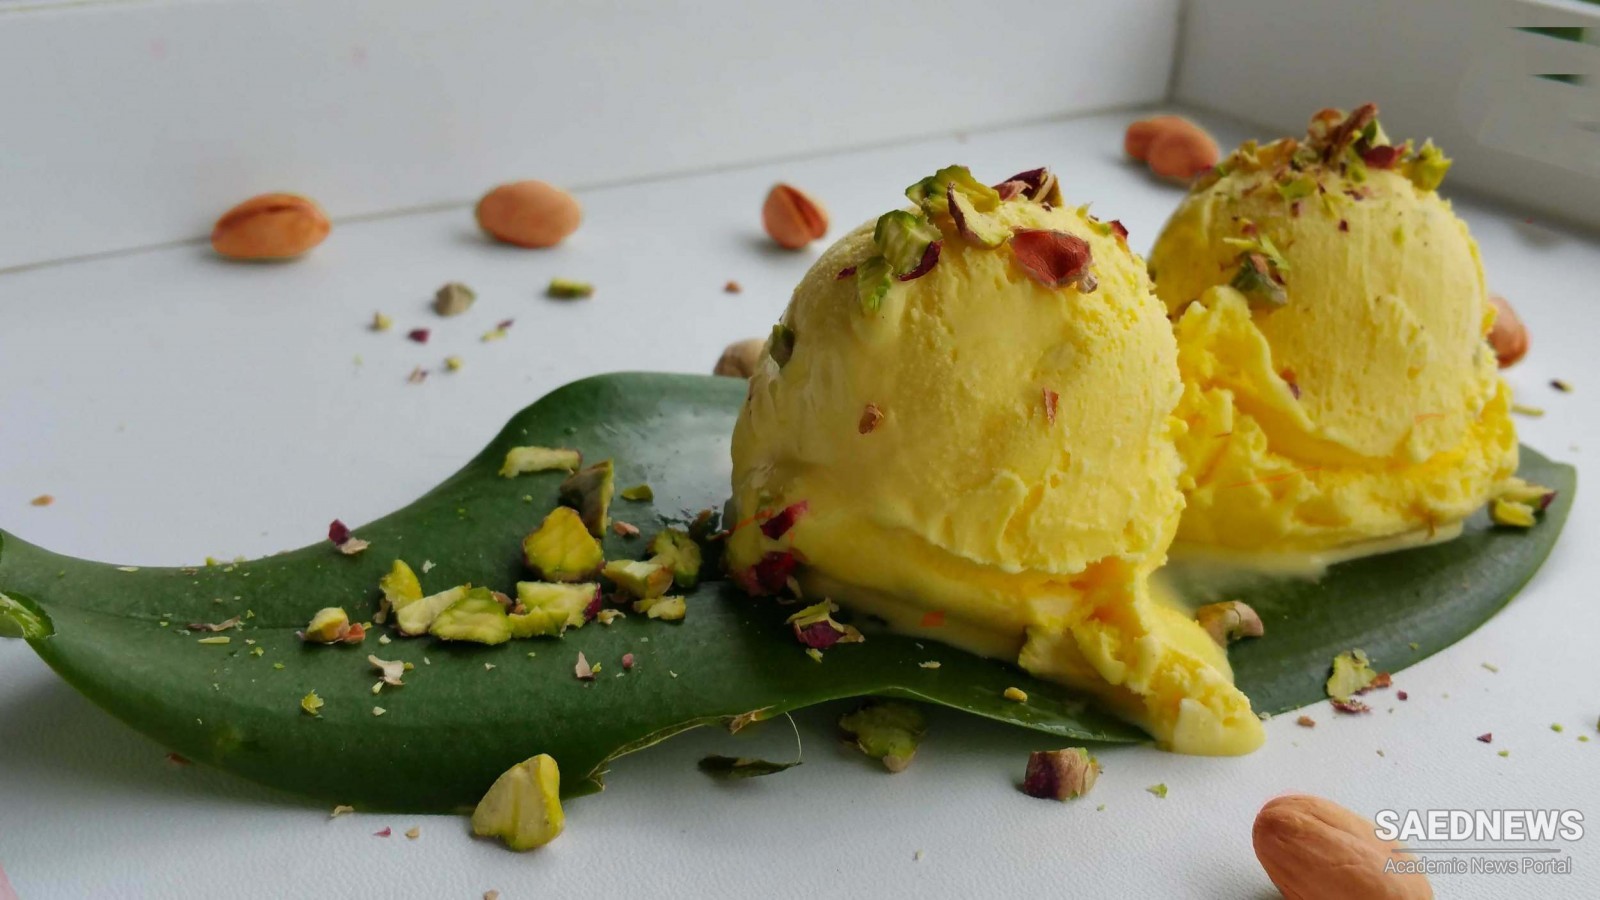 Iranian Desserts: Saffron, Pistachio Ice Cream